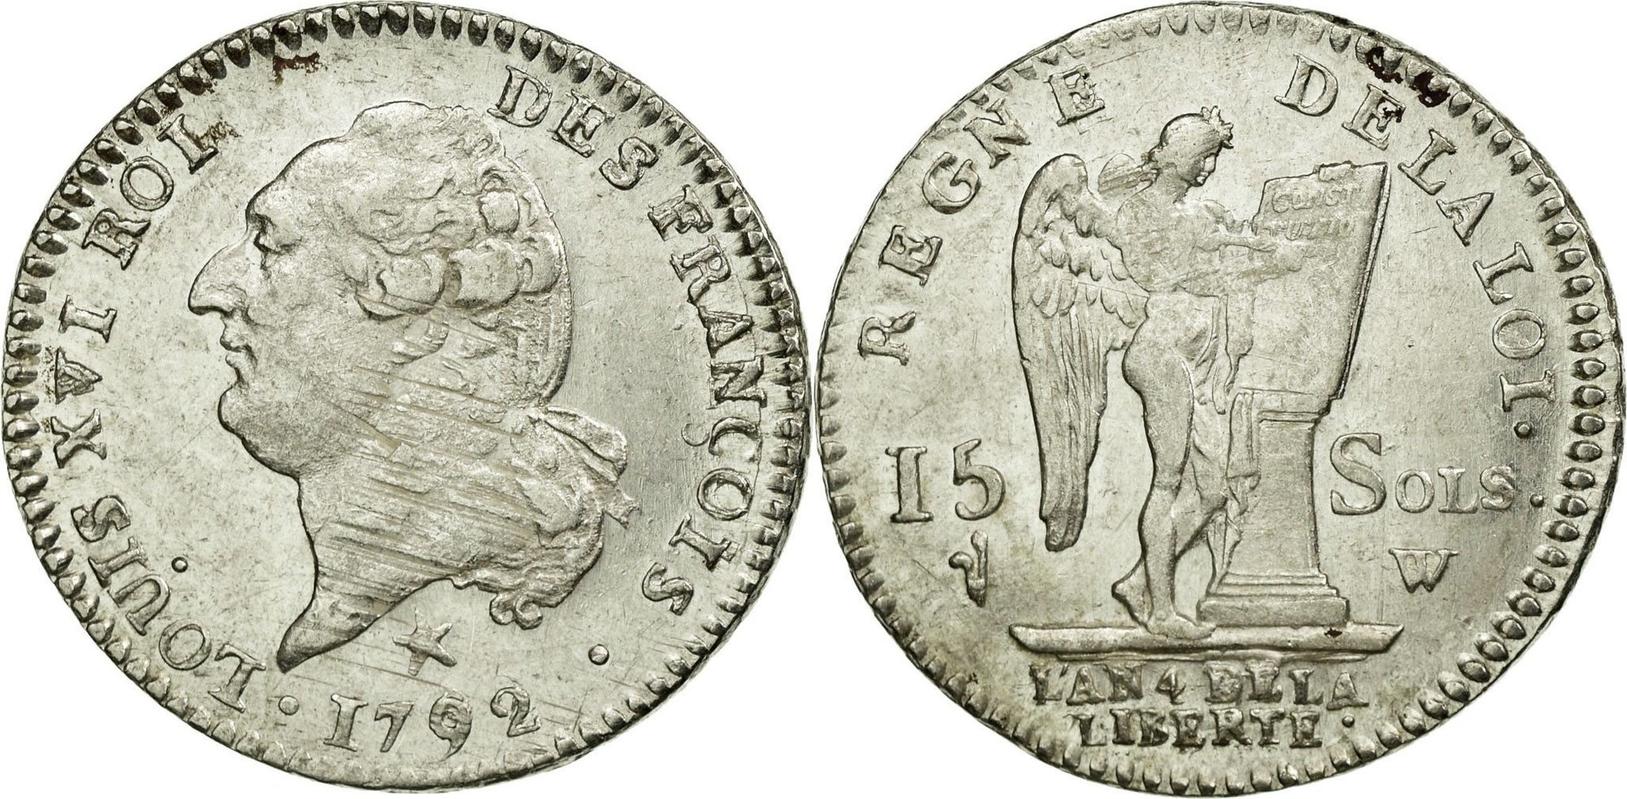 French 30. Франция экю 1636. 1 Лиард 1774 Франция w. 1 Доллар 1795. Франция 1 соль 1791 (a).